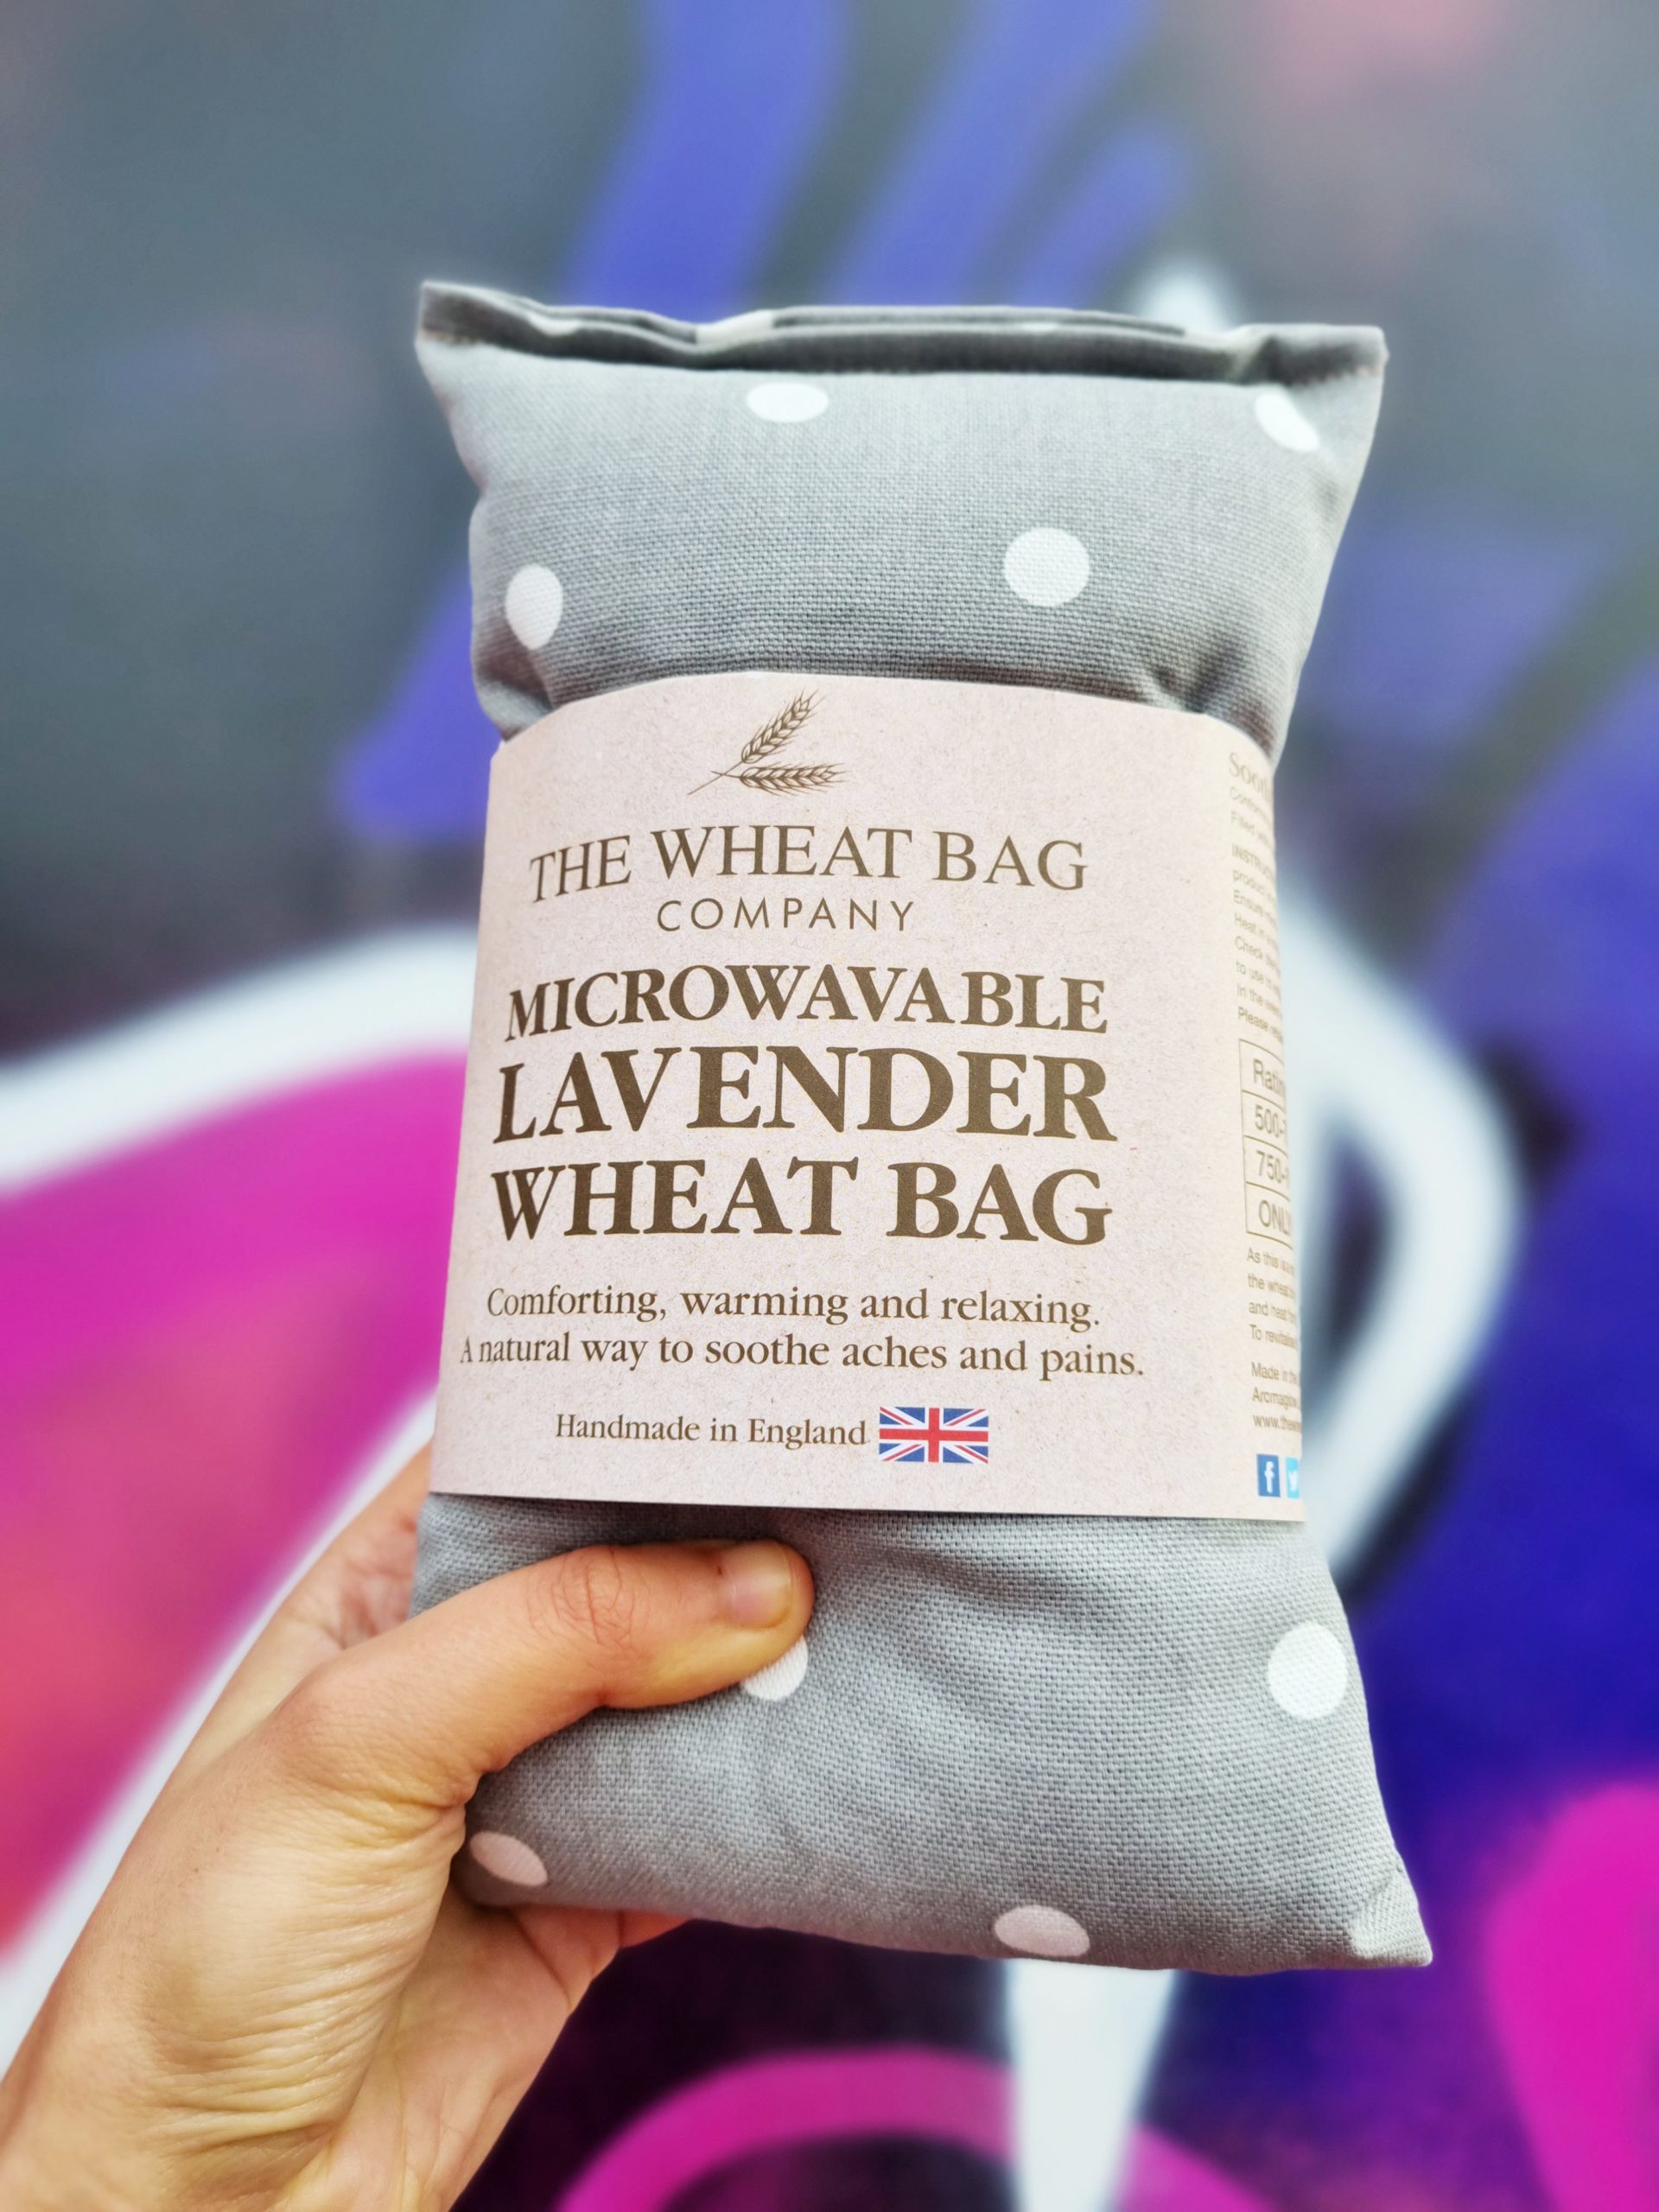 <img src="scentered.jpg" alt="scentered lavender wheat bag"/> 